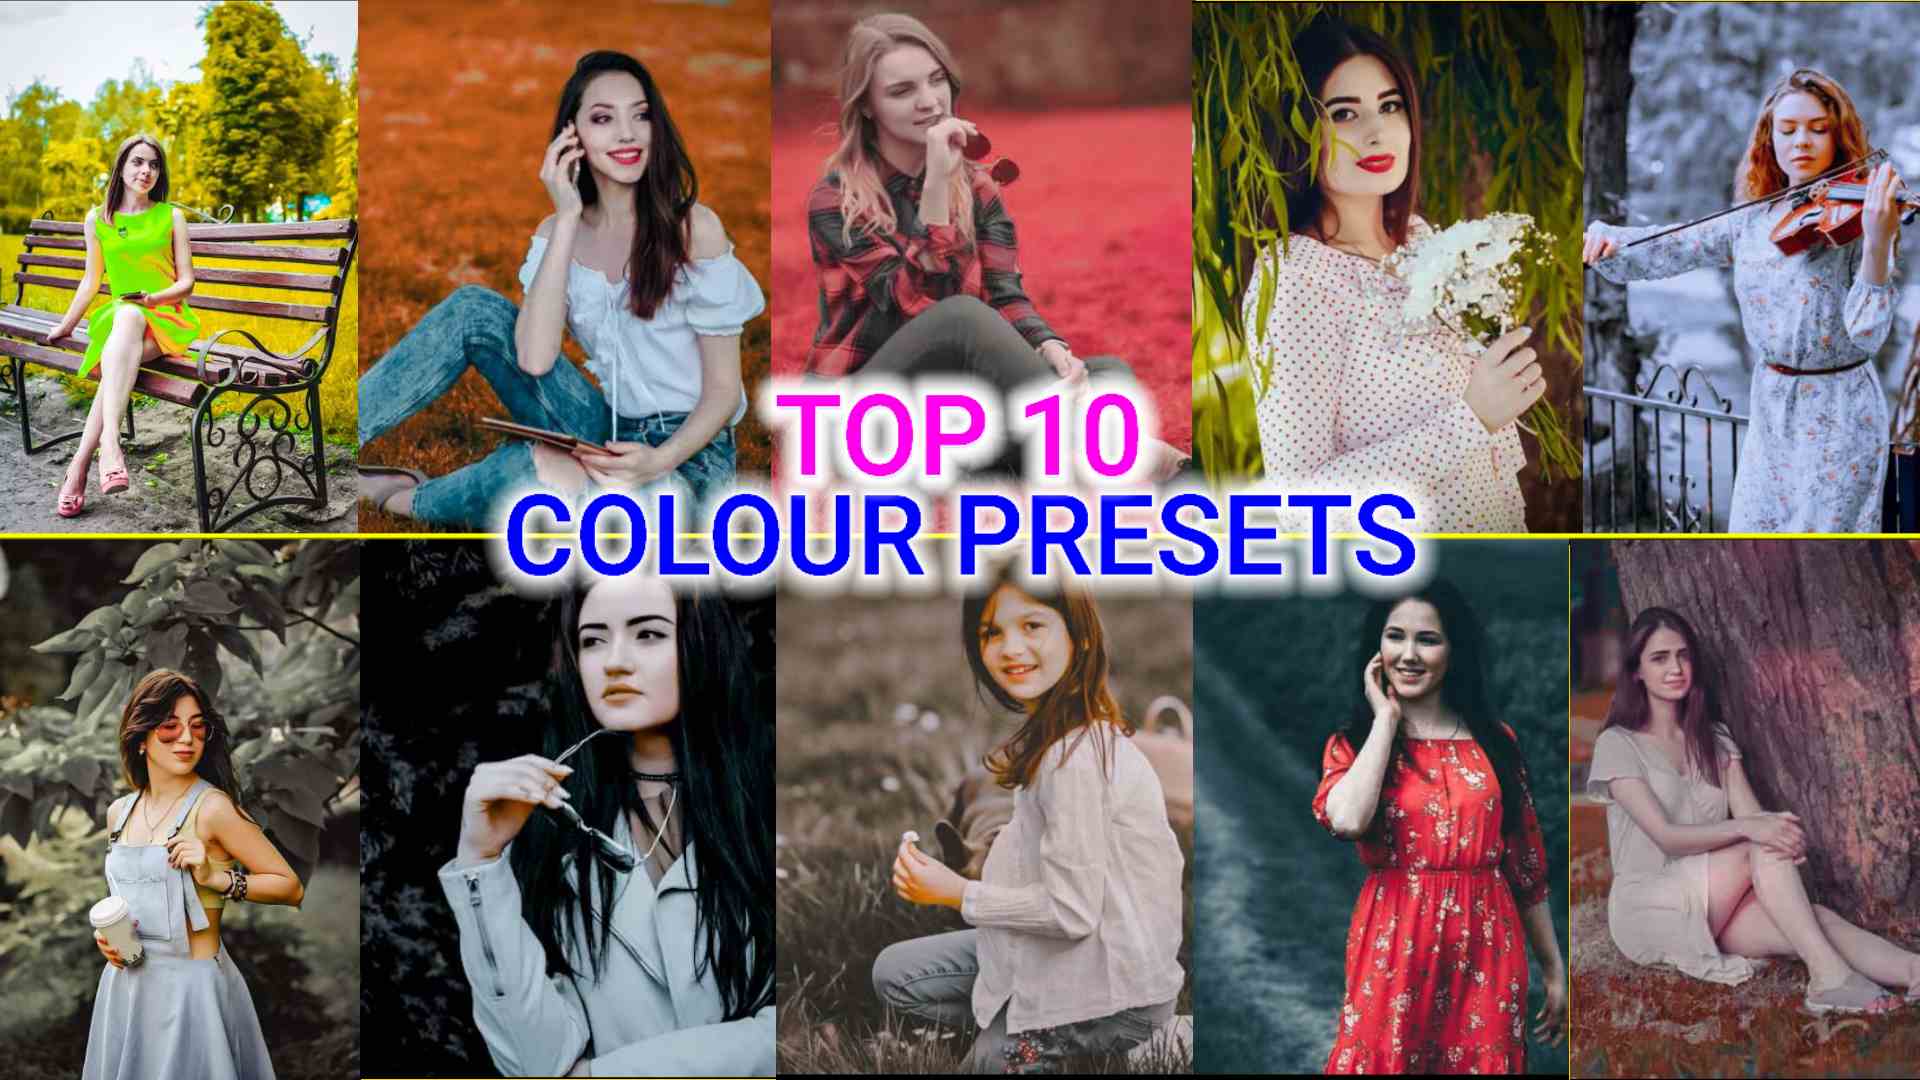 Top 10 Colour Lightroom Presets Free Download.